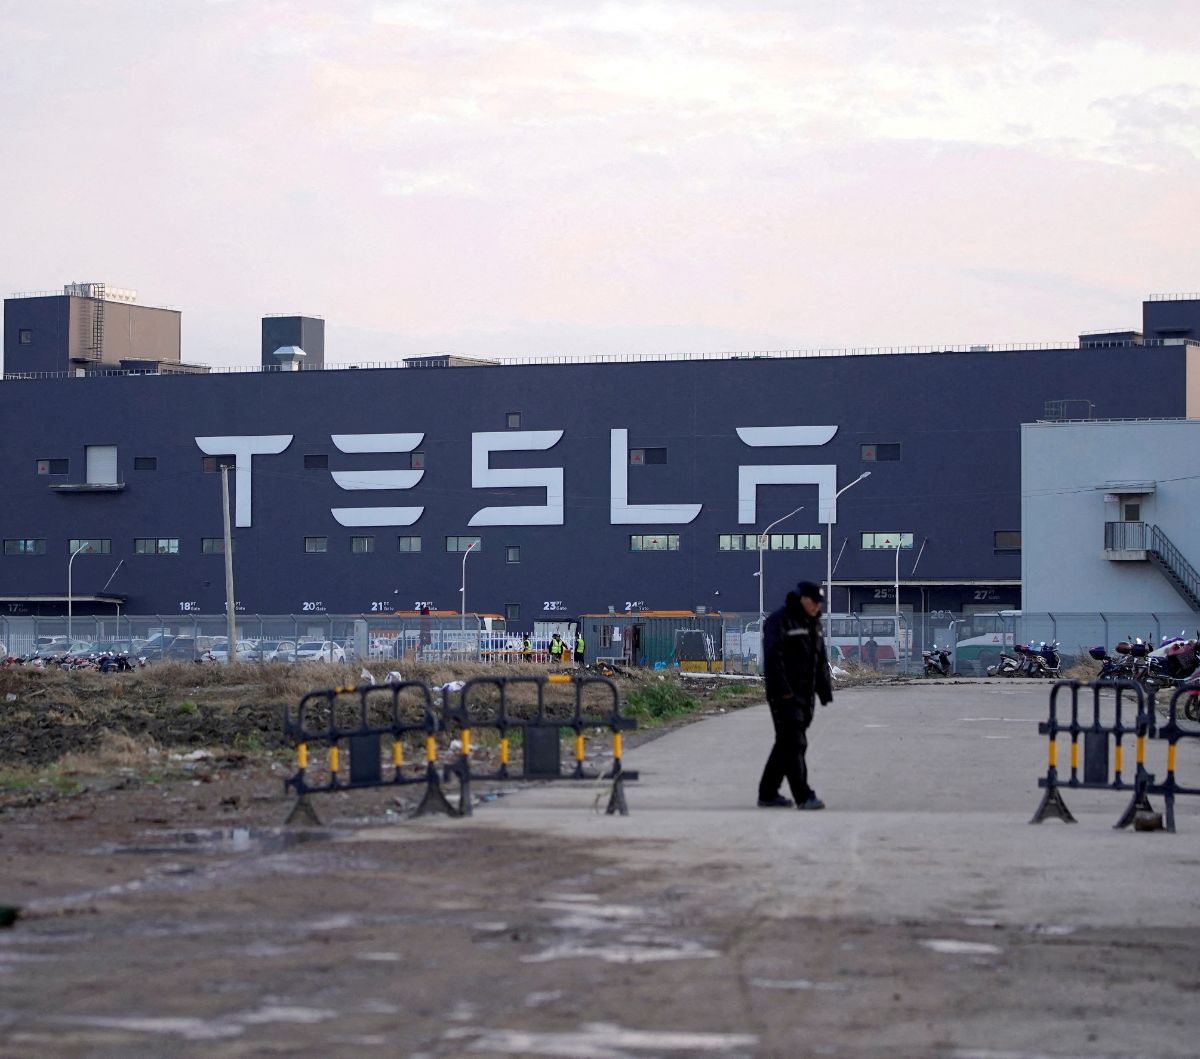 Pabrik Tesla Diserang Kutu Busuk